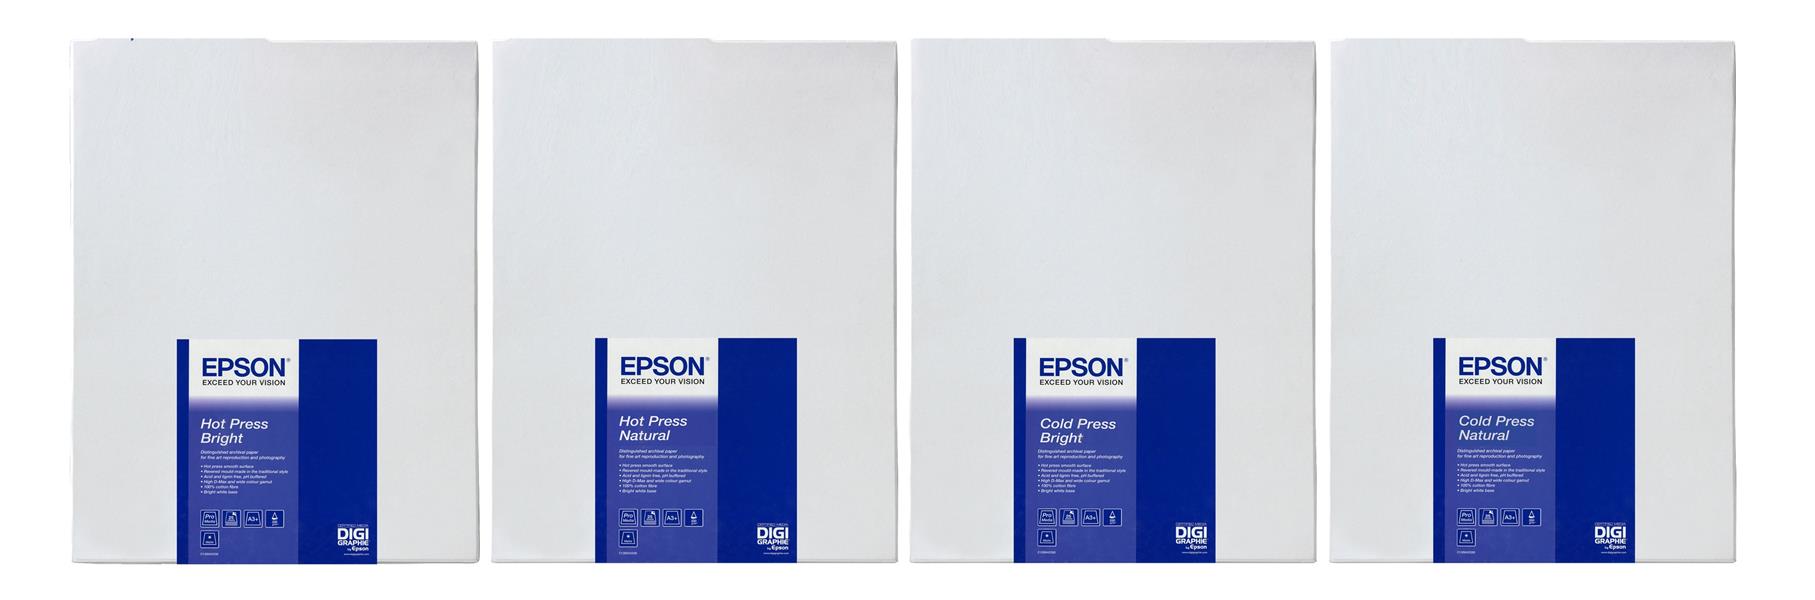 Epson Cold Press Natural 60""x 15m